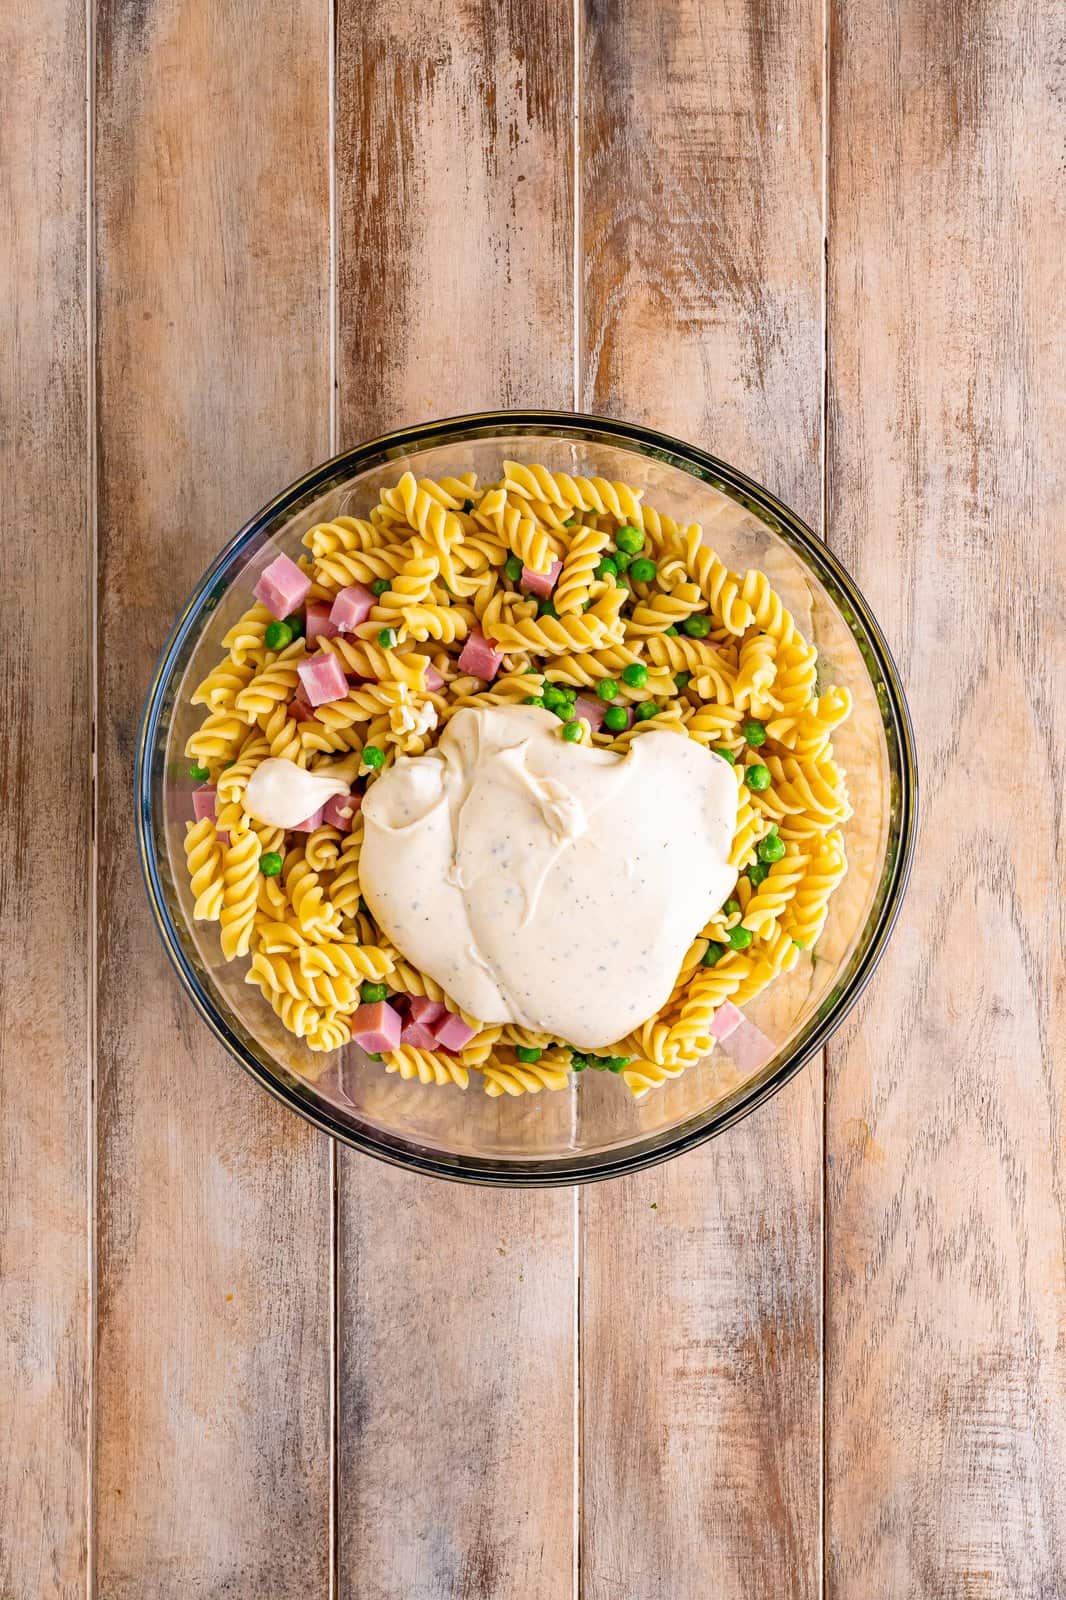 A bowl of rotini pasta, ham, peas, and mayo based dressing.